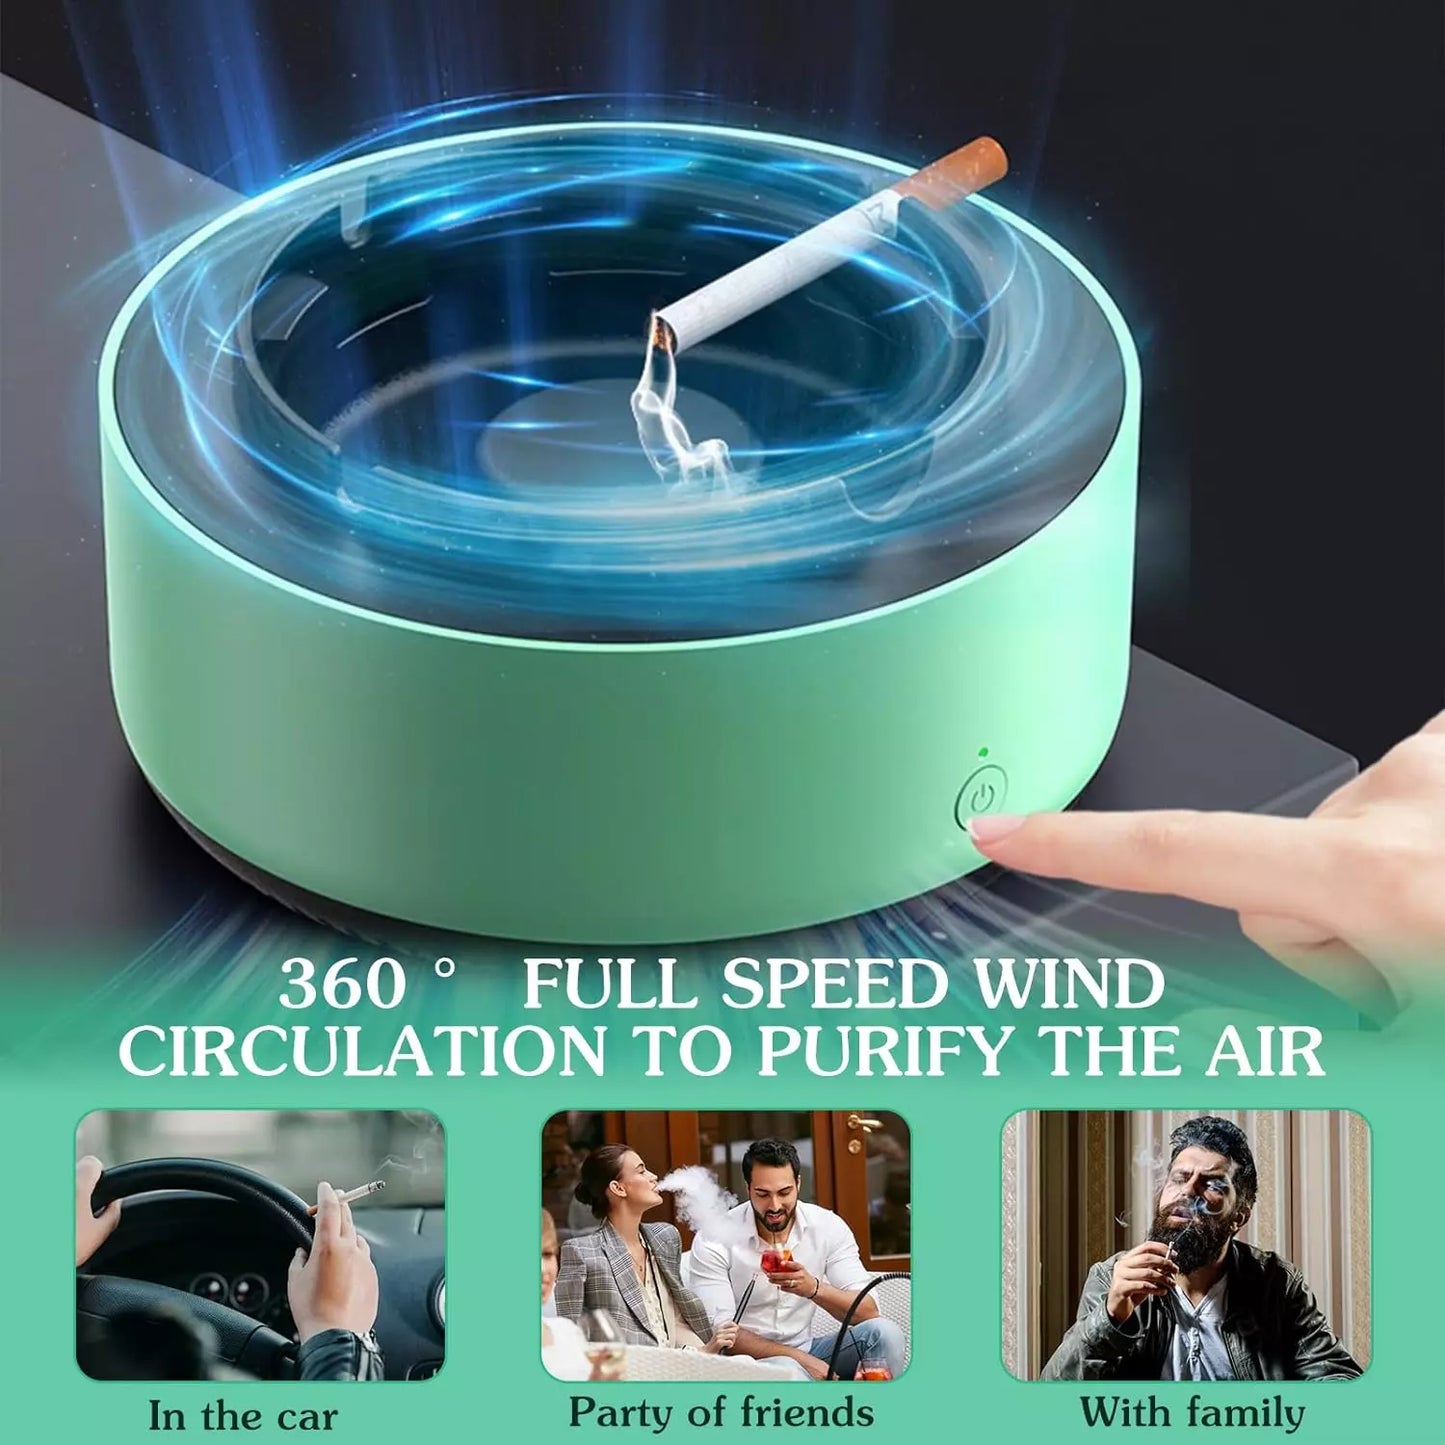 Puff Bro Smokeless Ashtray with Air Purifier-Go Smokeless With Self Extinguishing Smart Ashtray